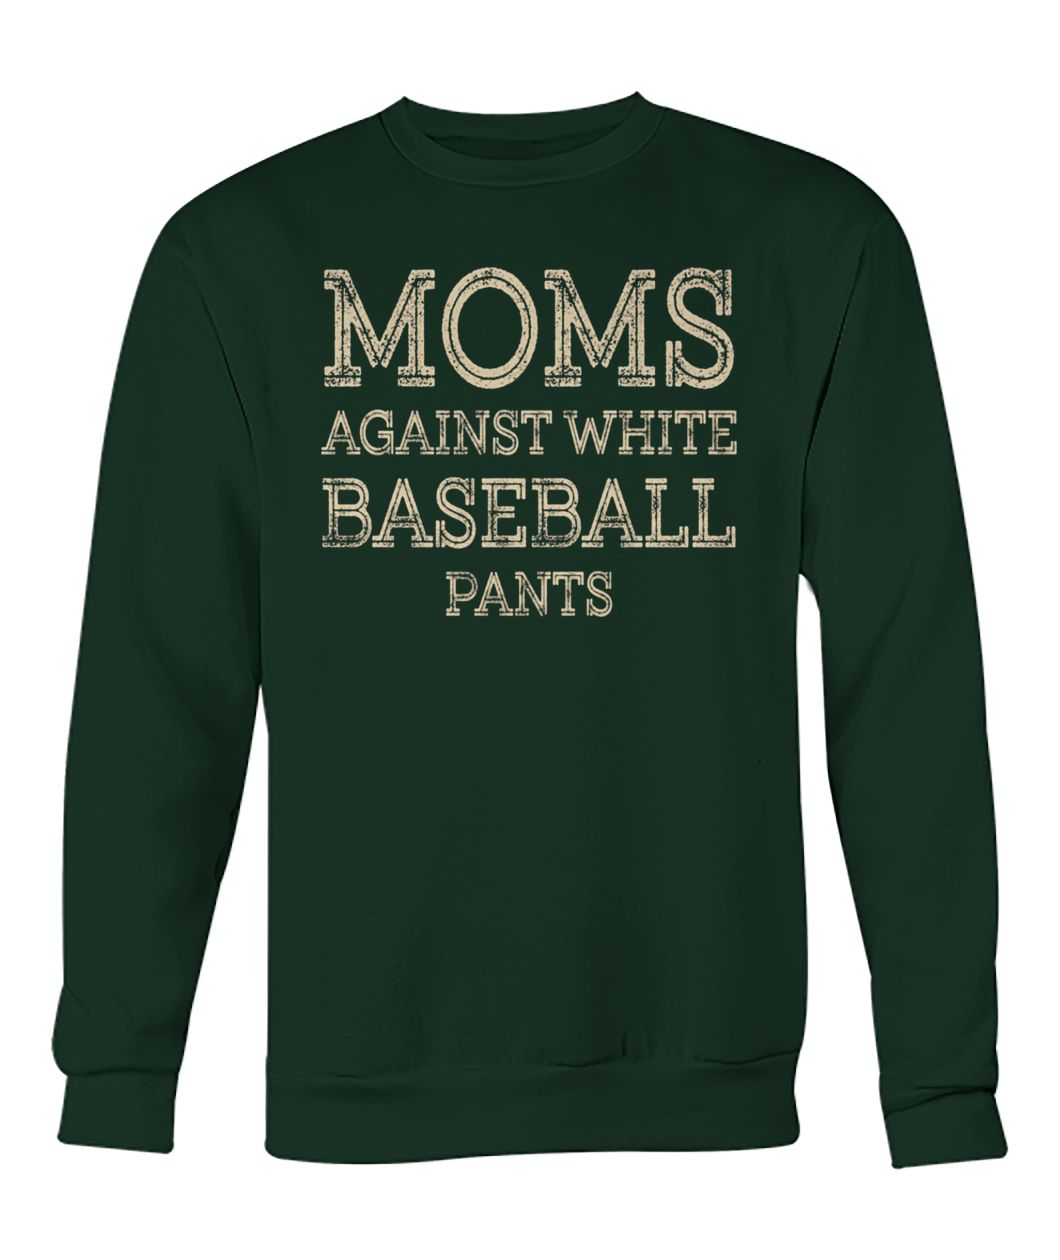 Vintage moms against white baseball pants crew neck sweatshirt